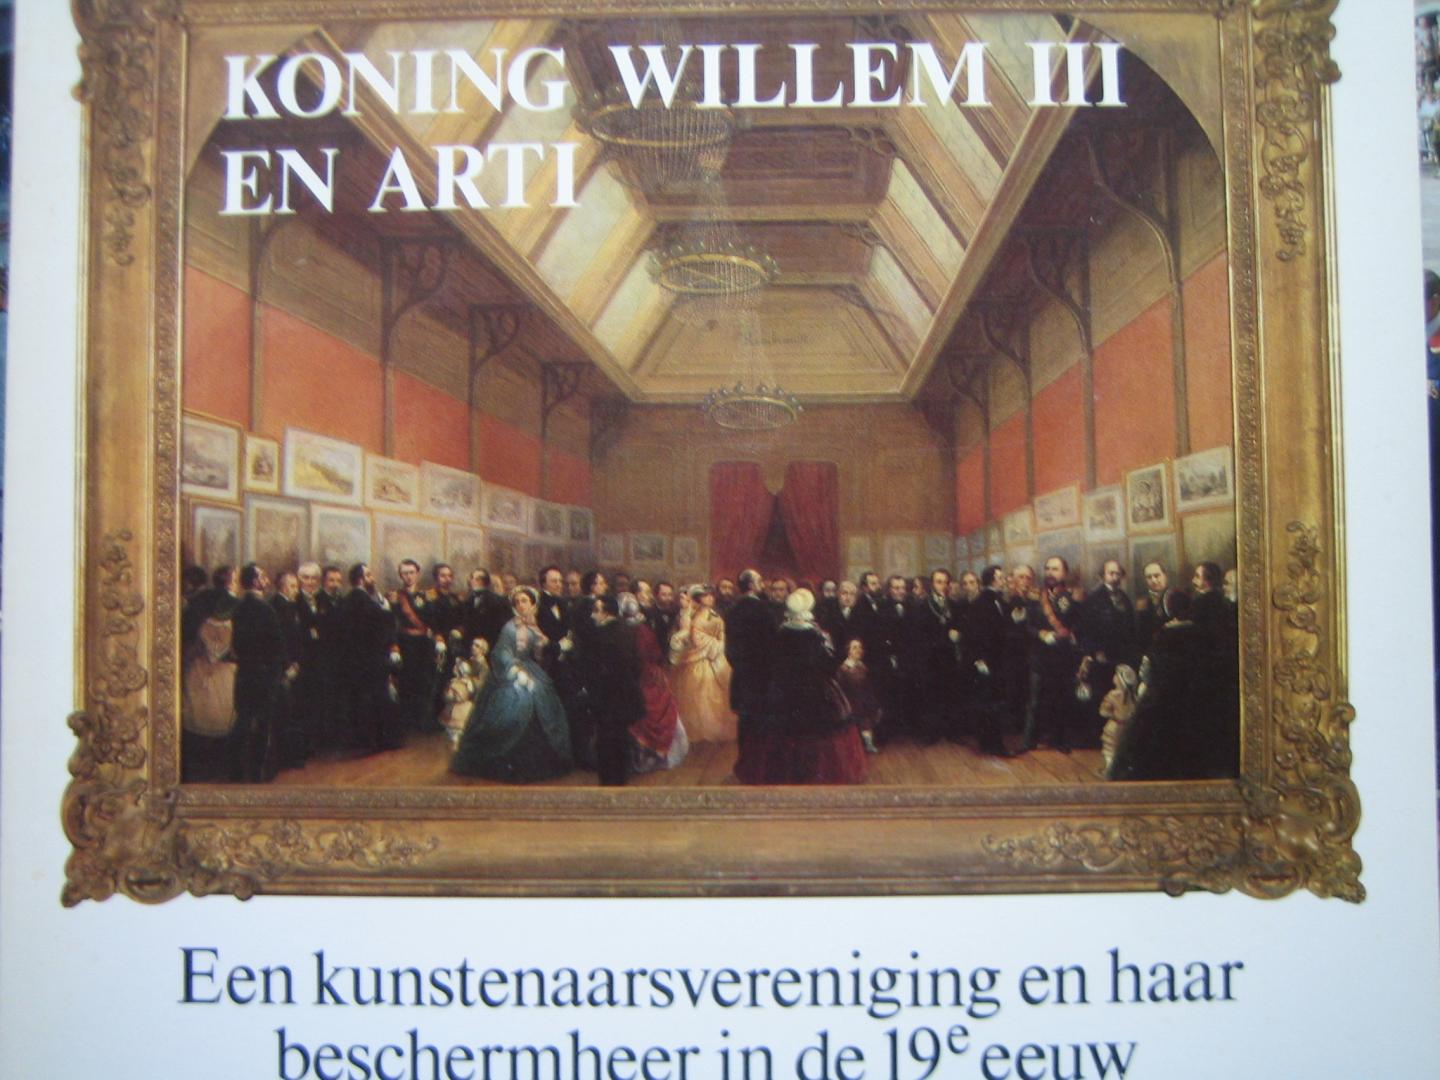 Fleurbaay E. - Koning willem iii en arti